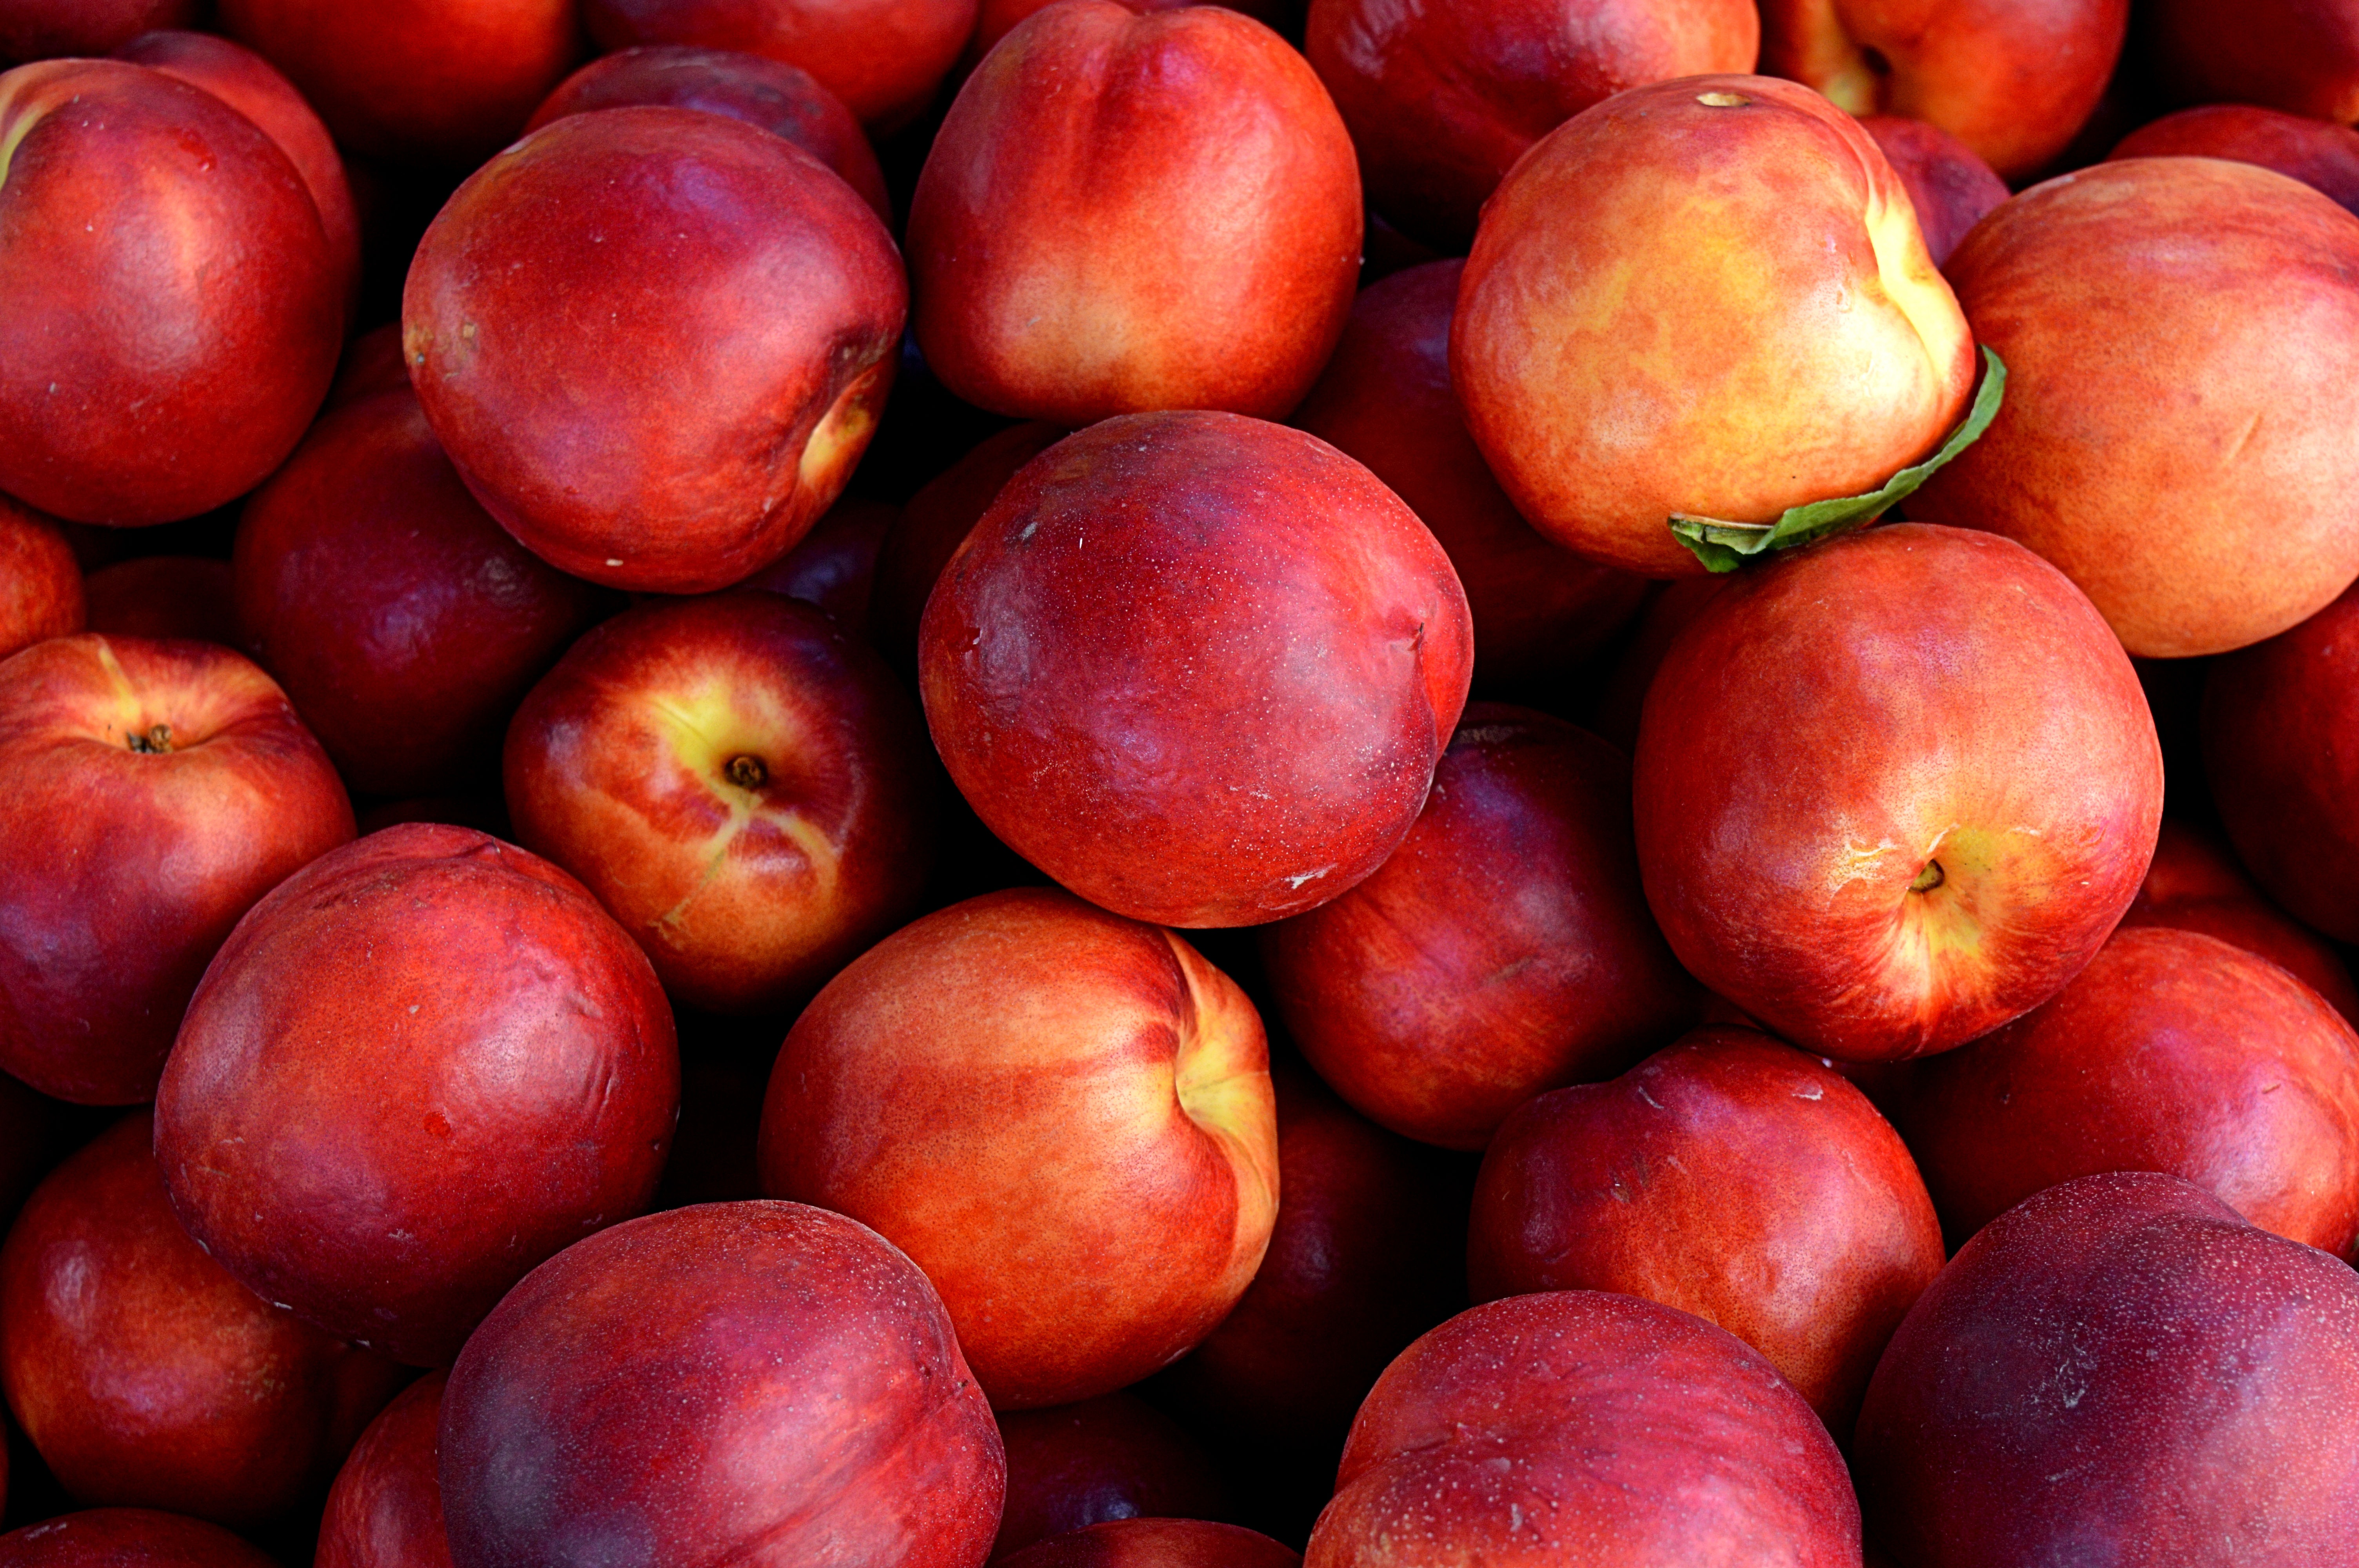 Ripe peaches in the color red